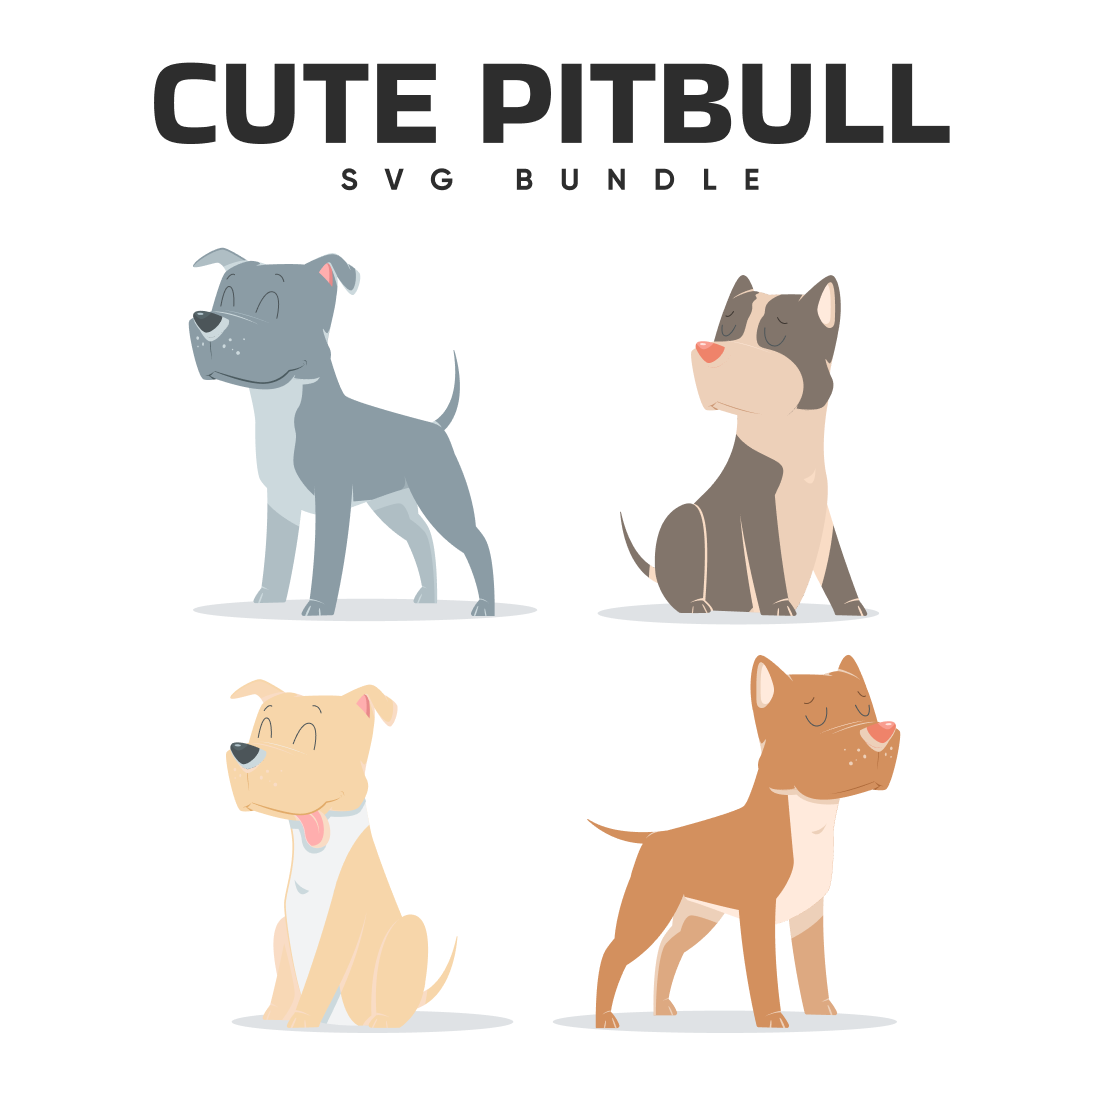 The cute pitbull svg bundle.